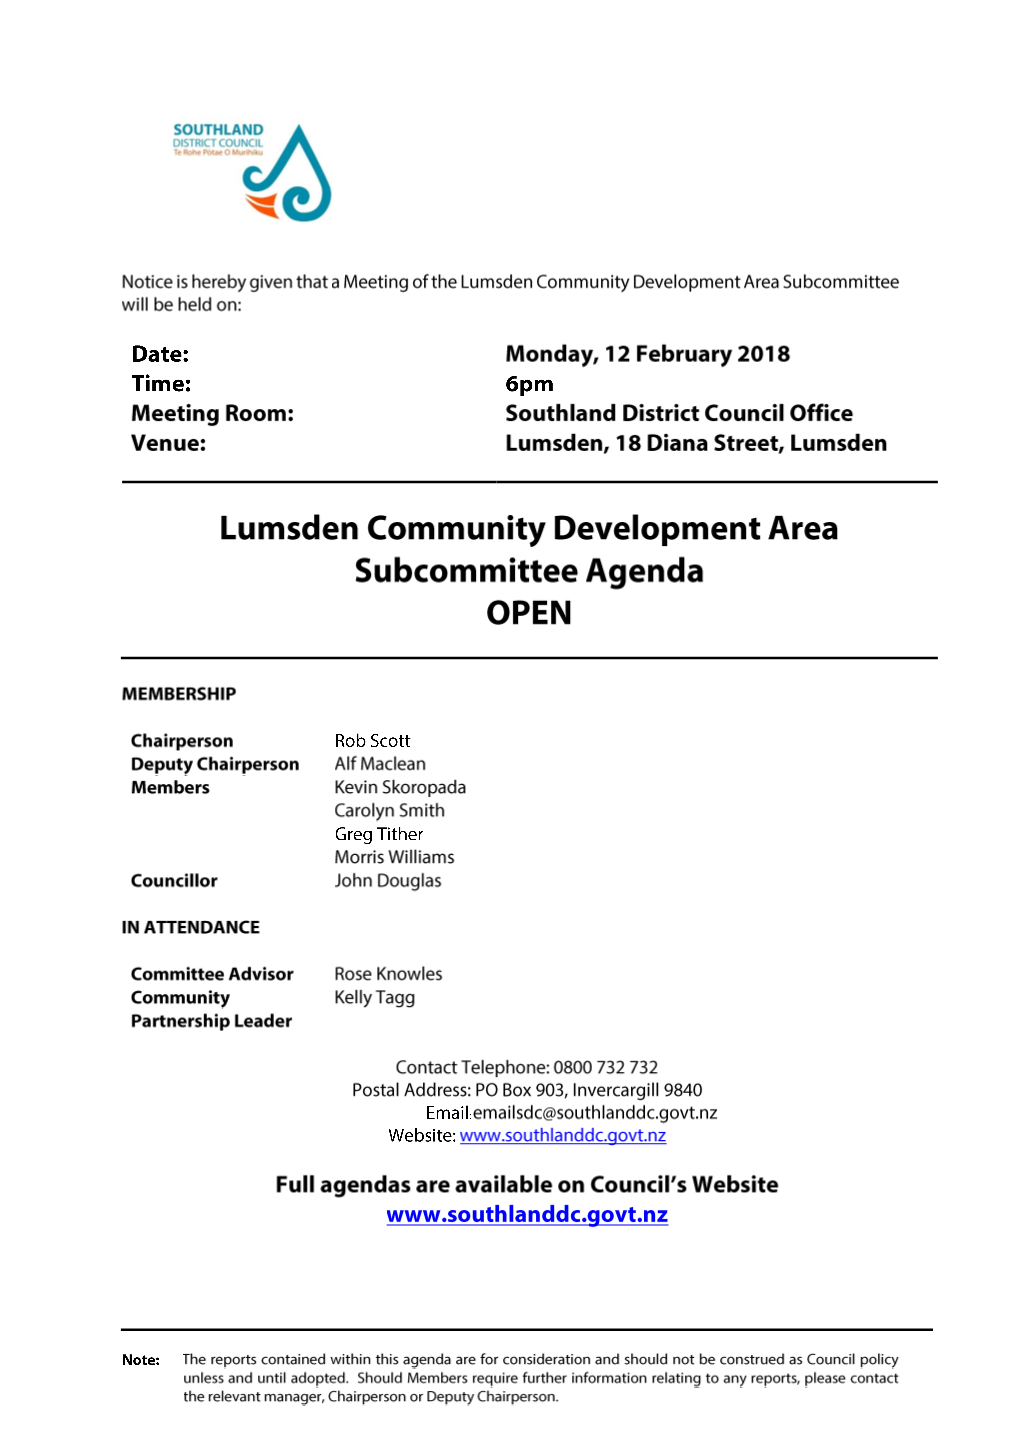 Agenda of Lumsden Community Development Area Subcommittee